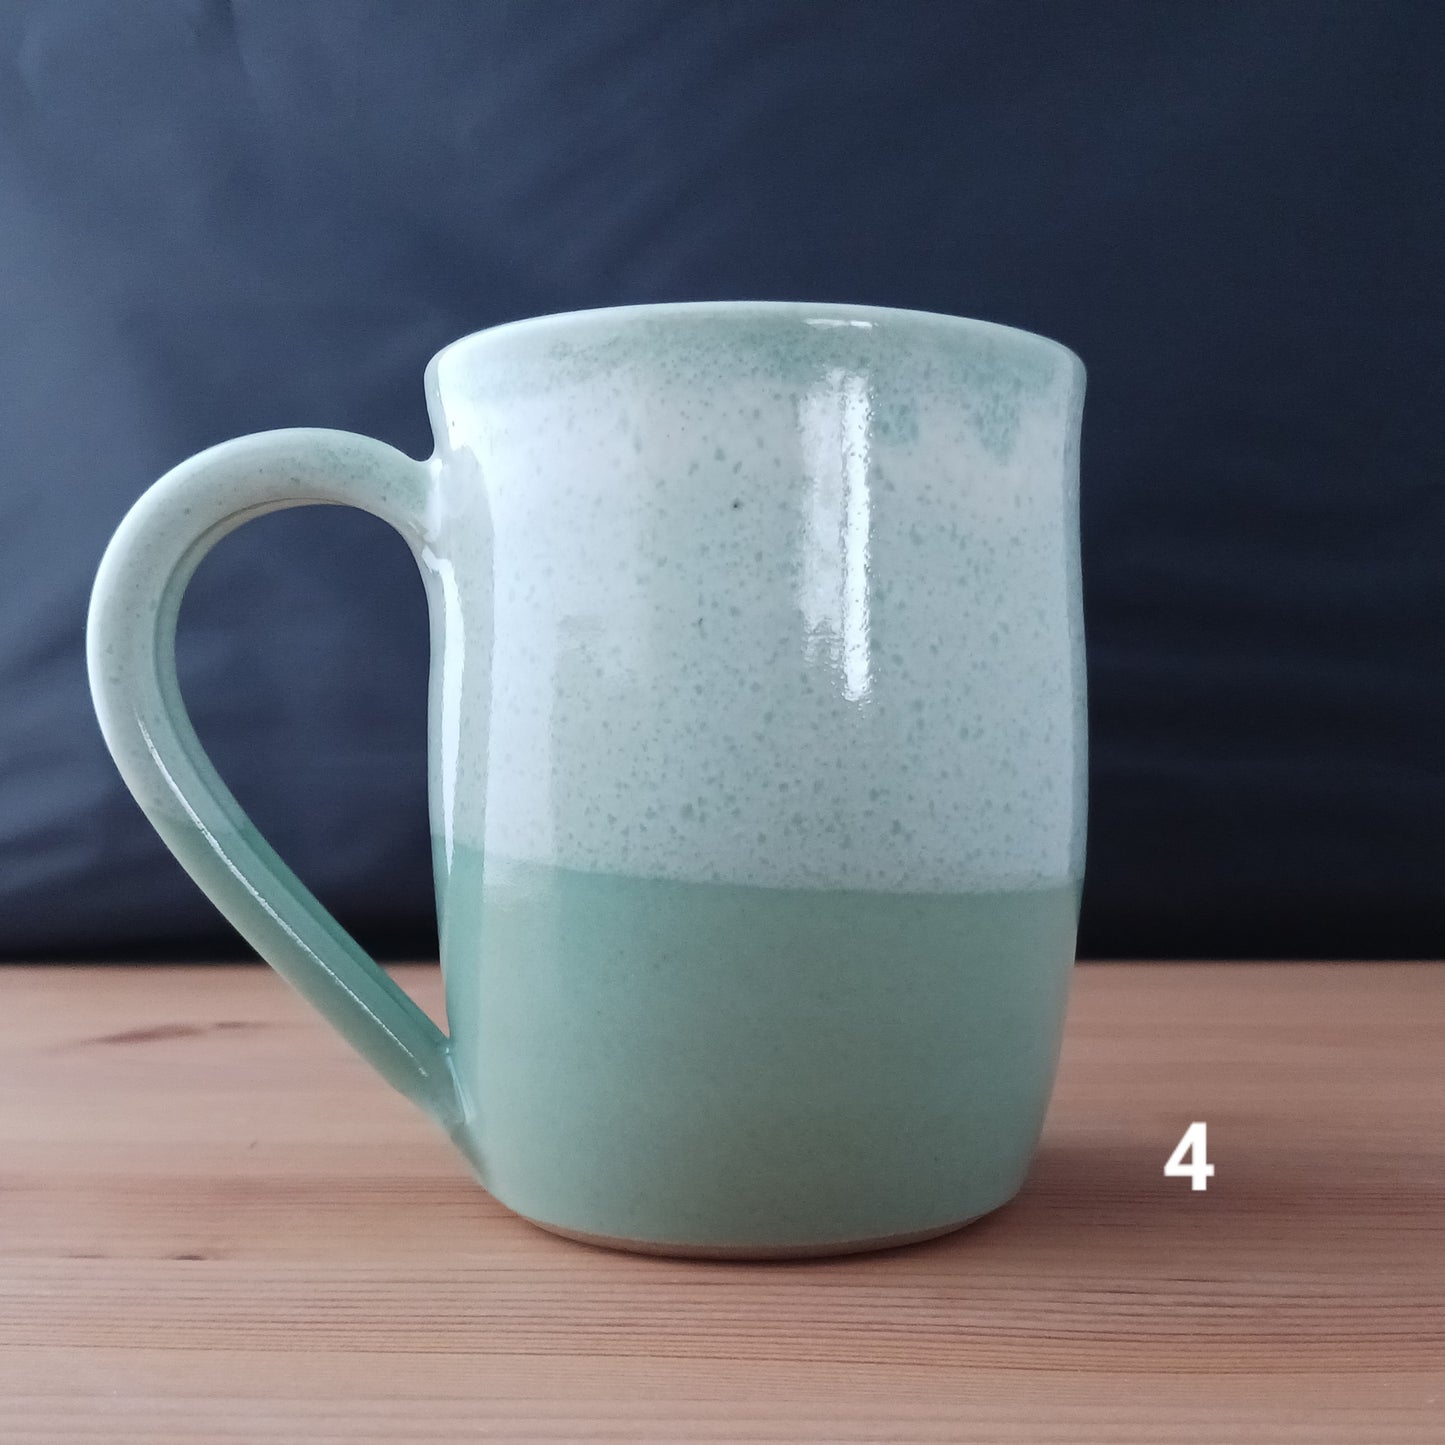 Foamy sea green mug collection